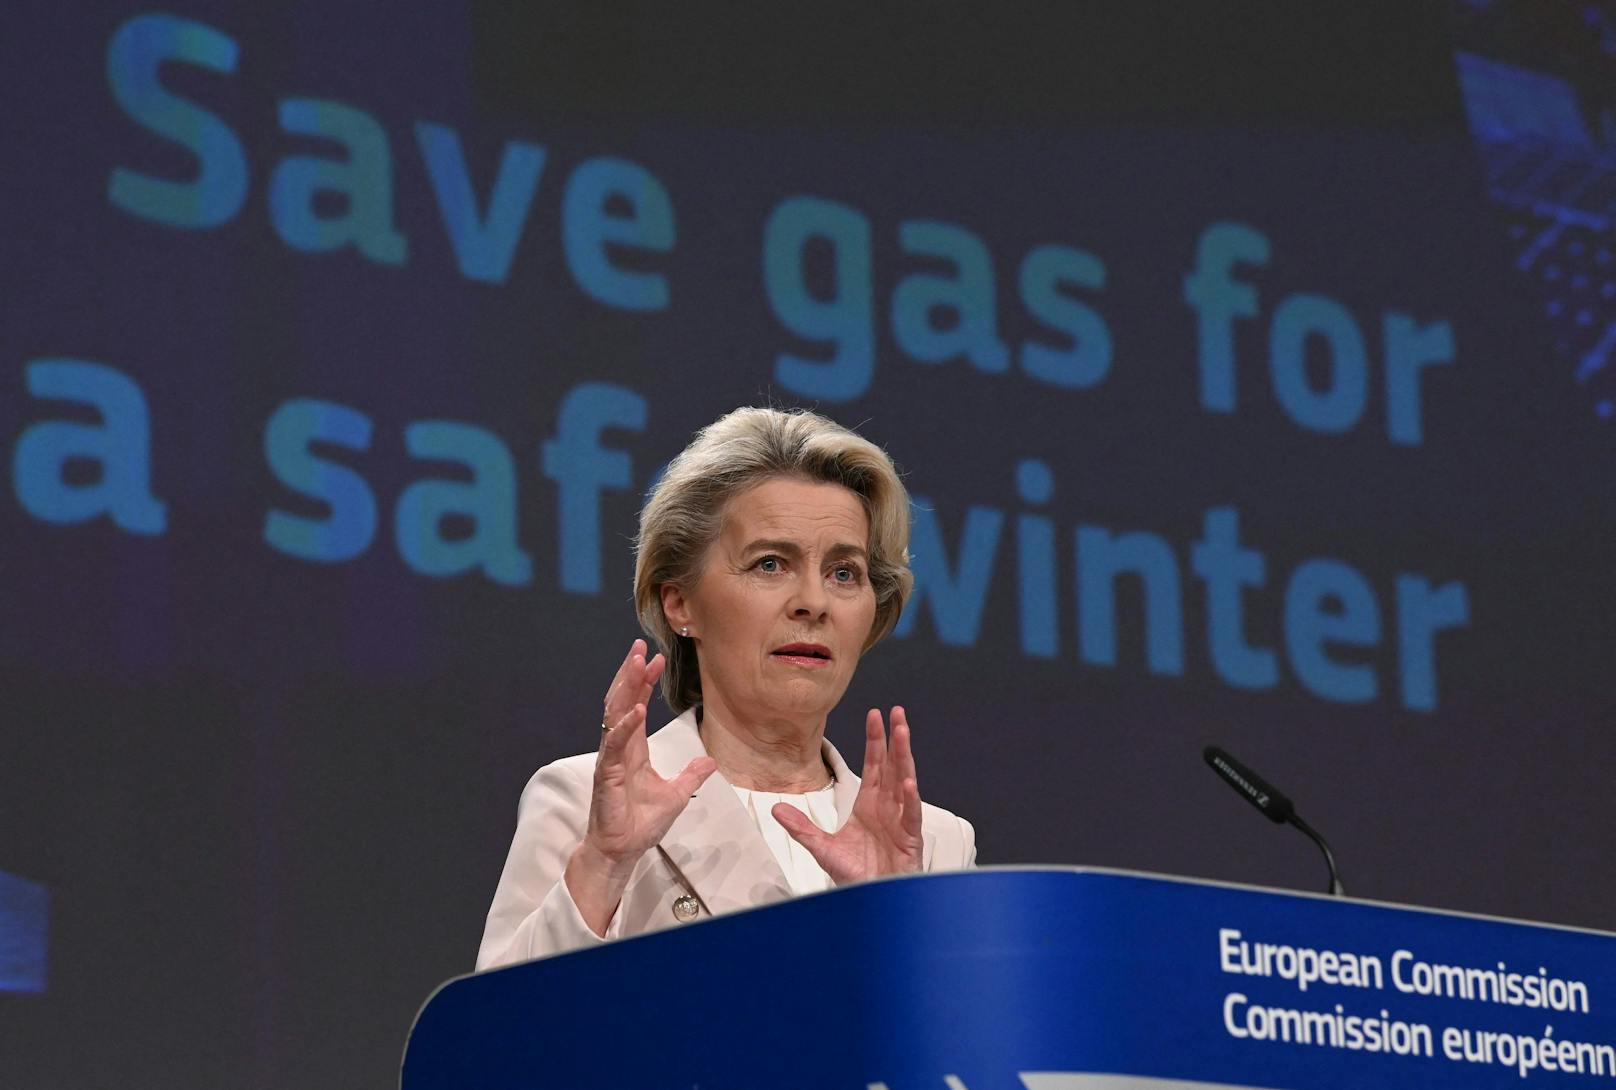 "Schlimmste Situation" – so warnt EU vor Gas-Notstand